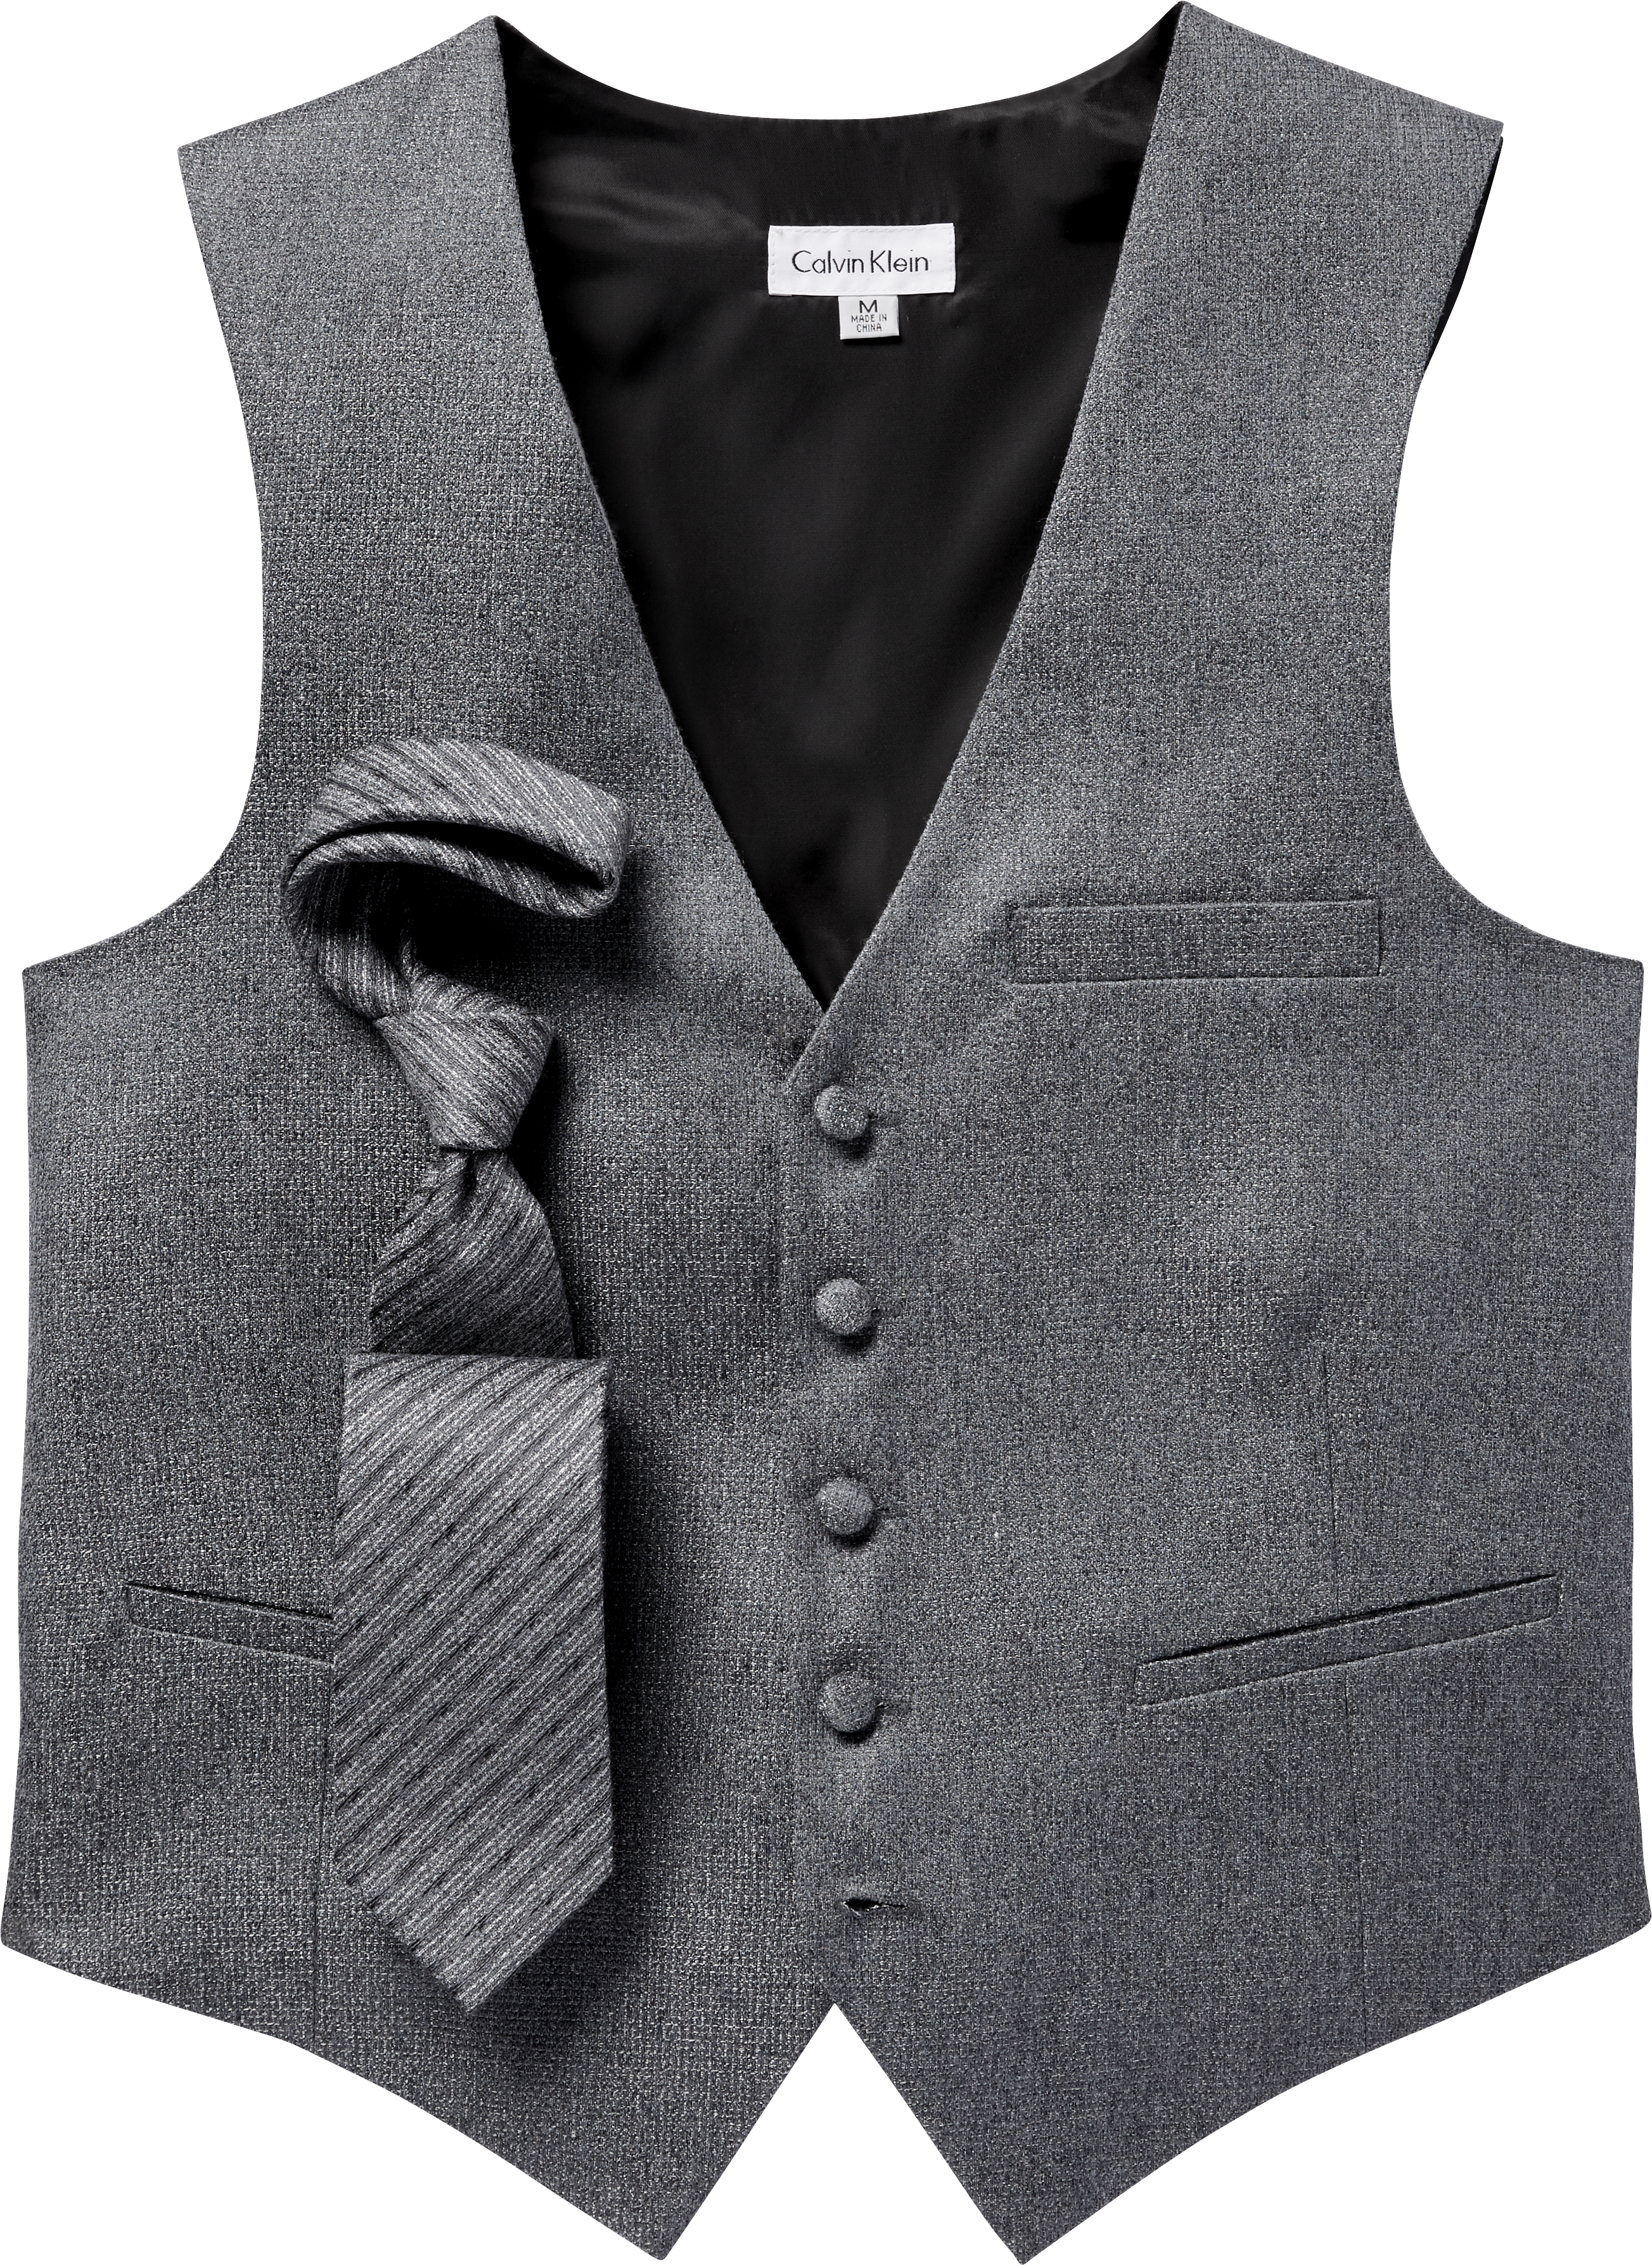 Big & Tall Tuxedos, Formalwear & Formal Attire in XL | Men's Wearhouse